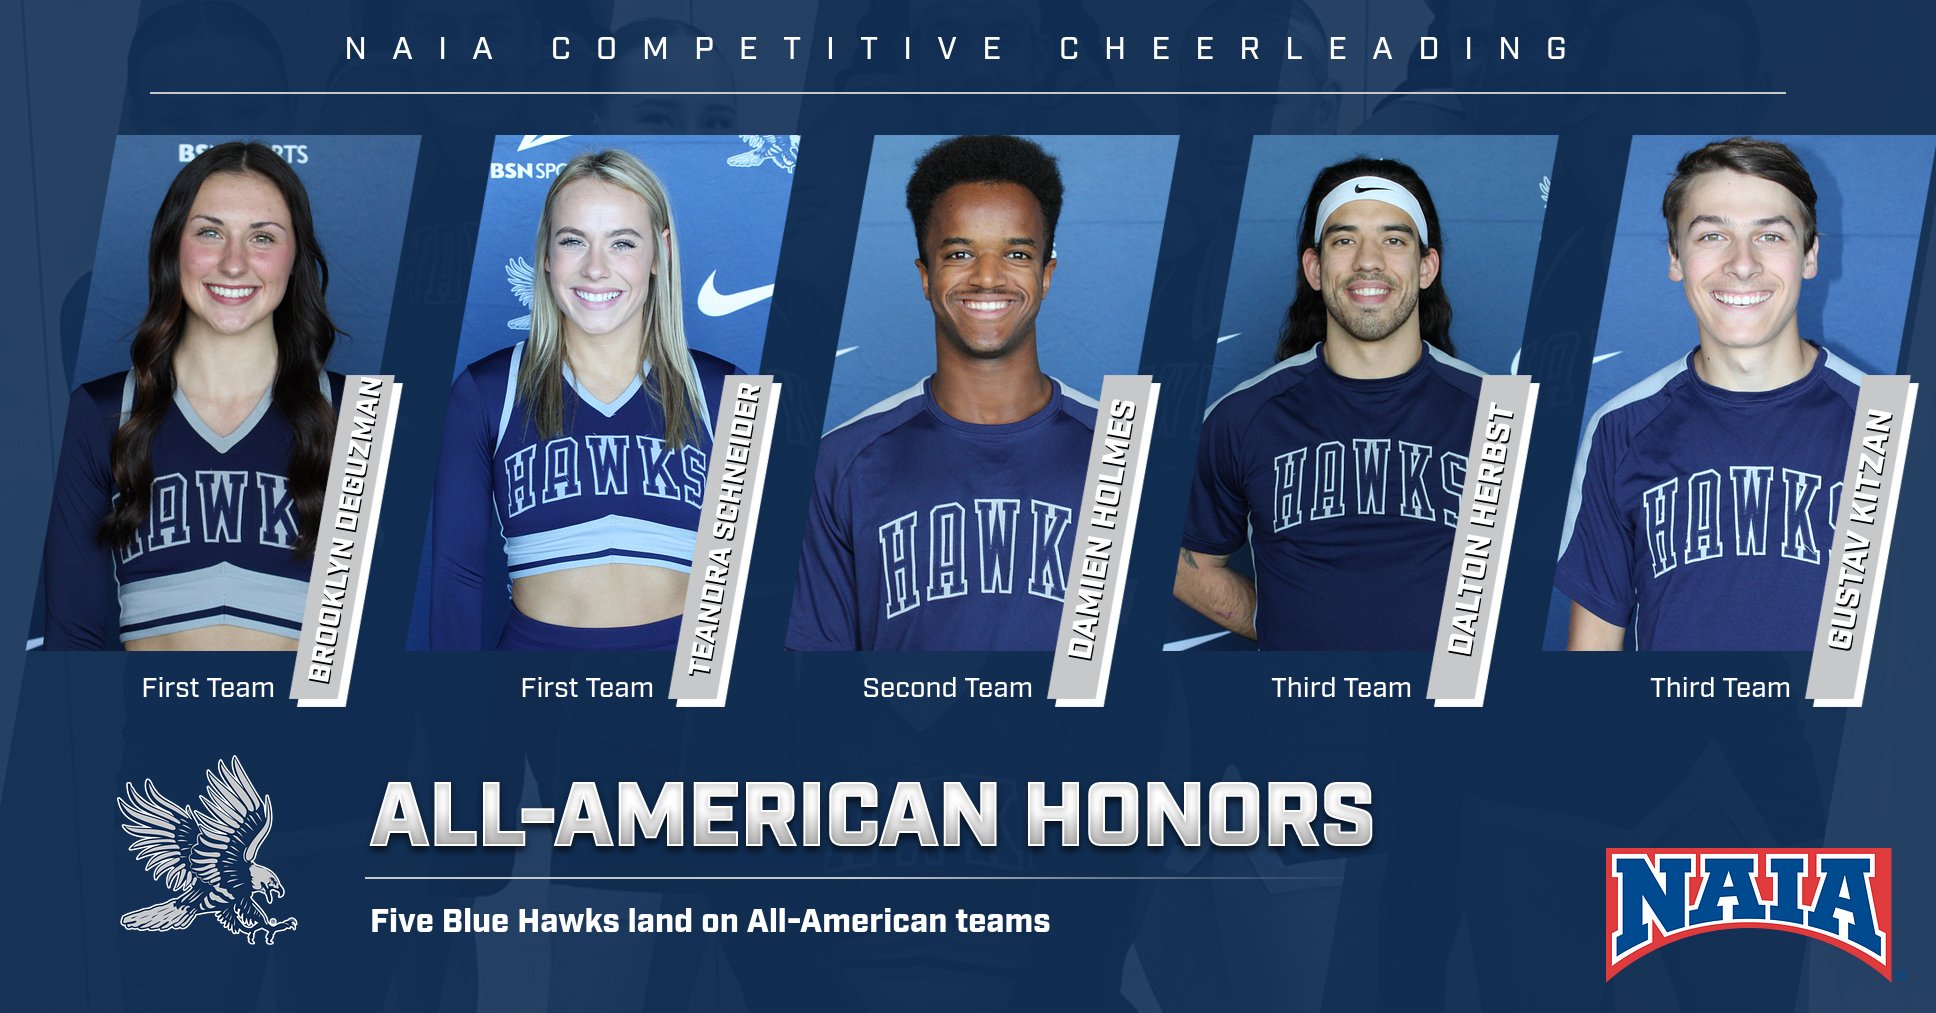 Five Blue Hawks earn All-American honors in cheer